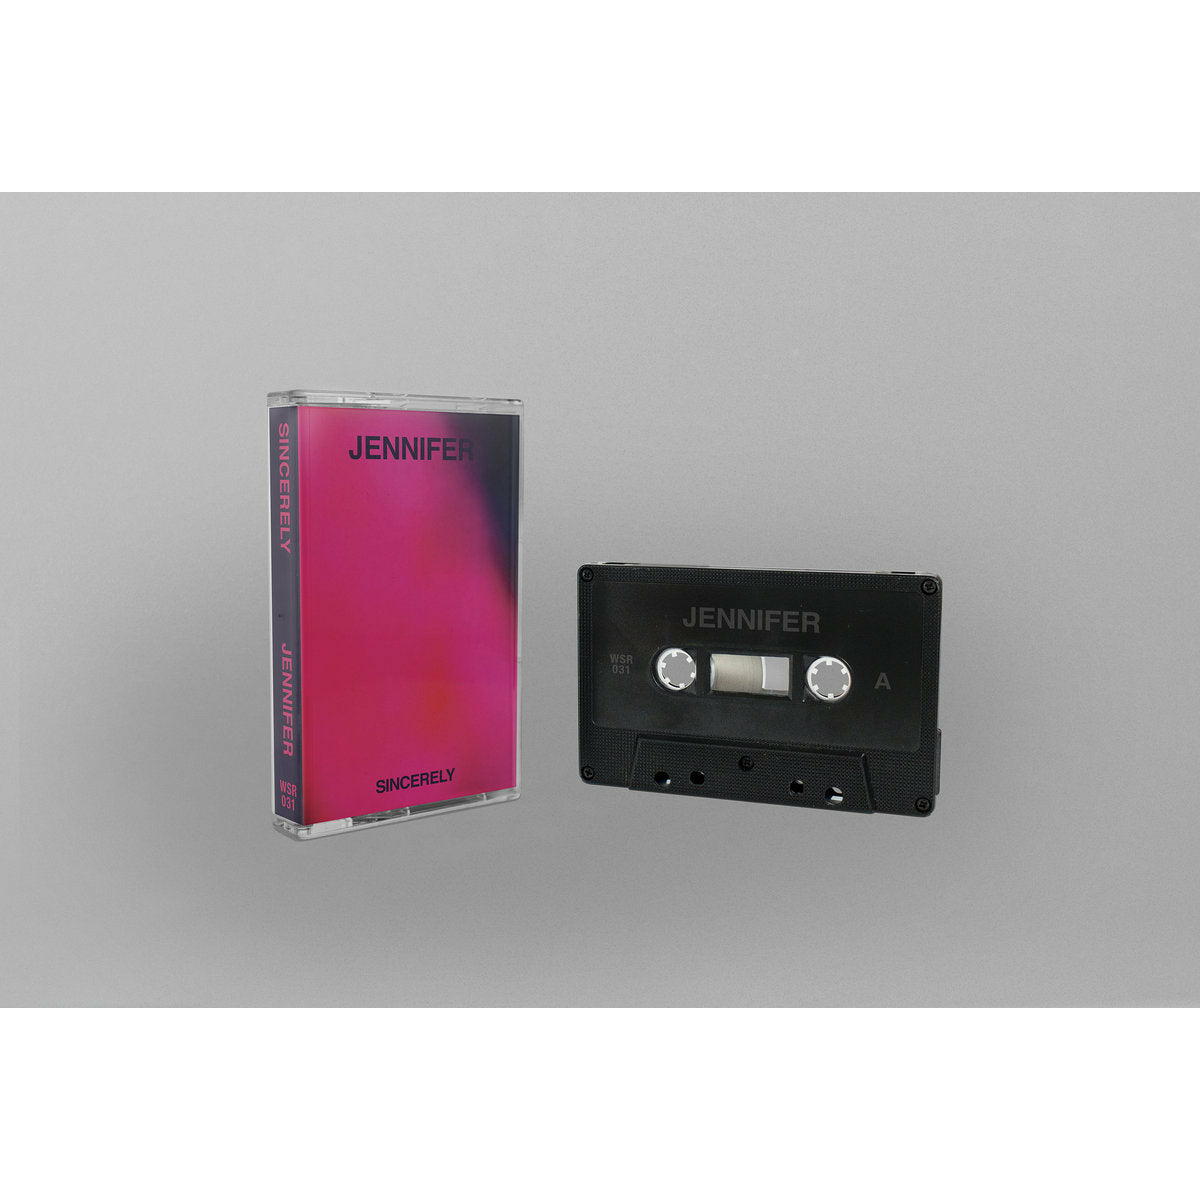 Jennifer - Sincerely cassette